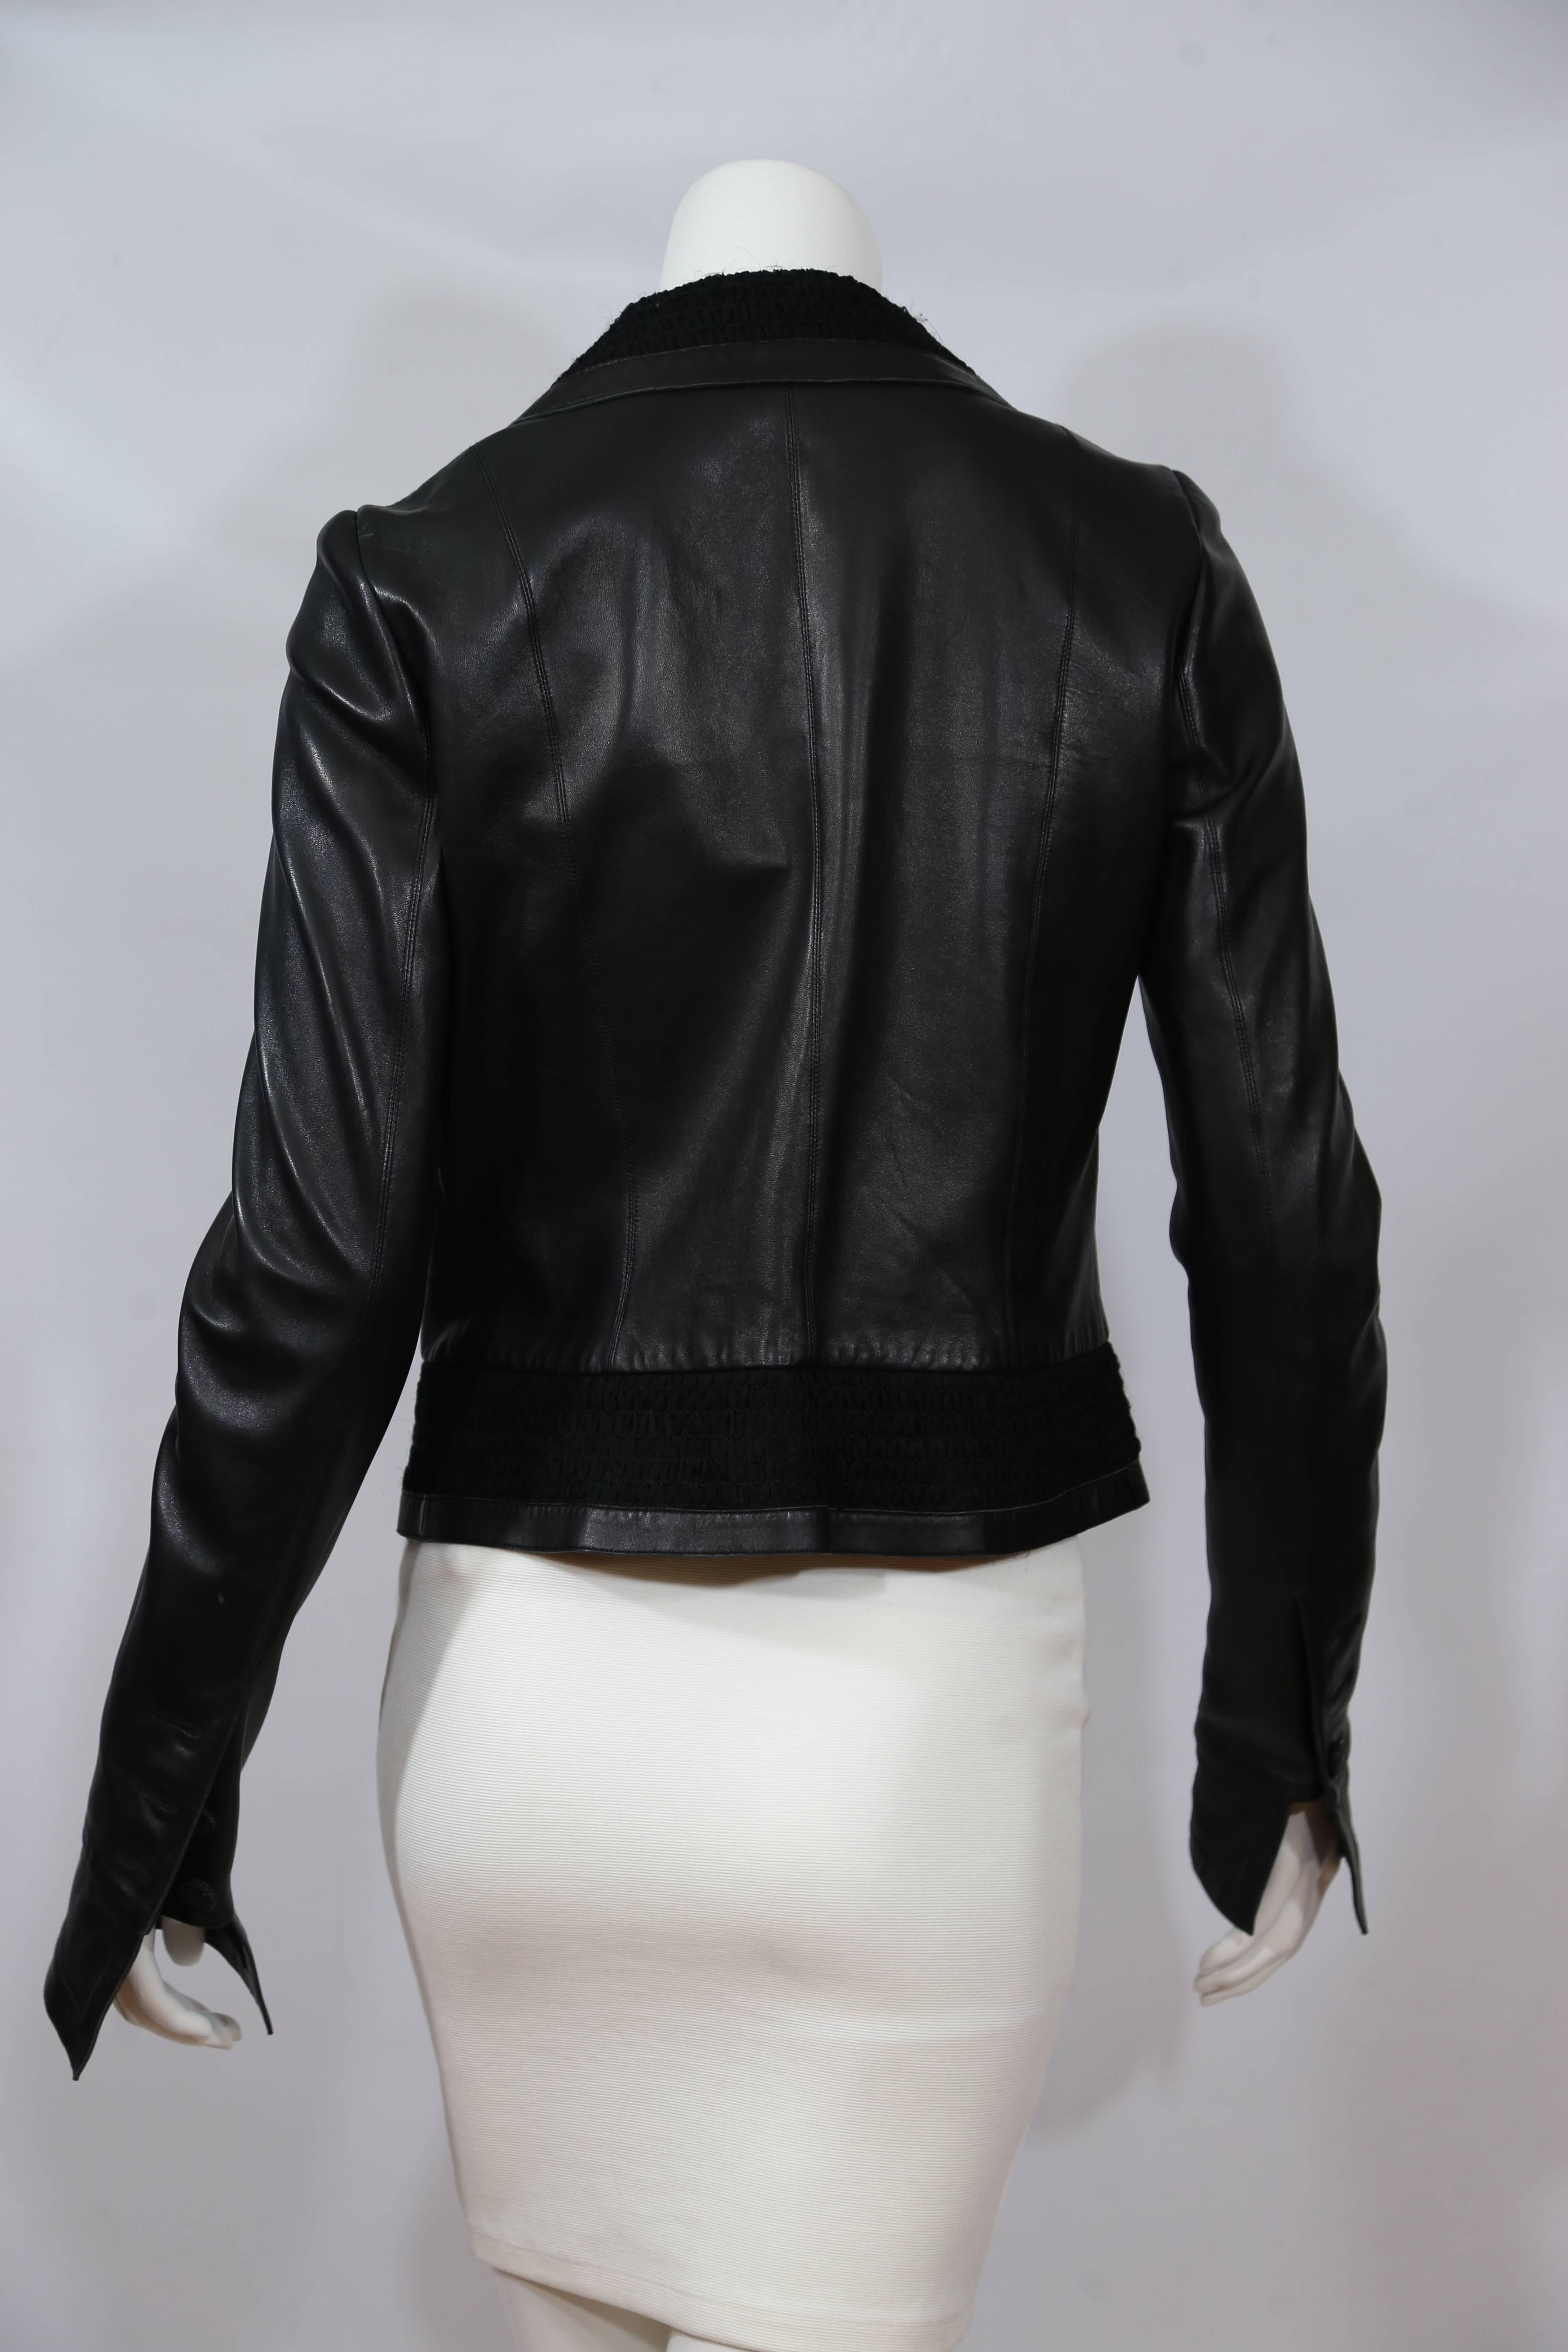 Women's Chanel Black Leather Jacket